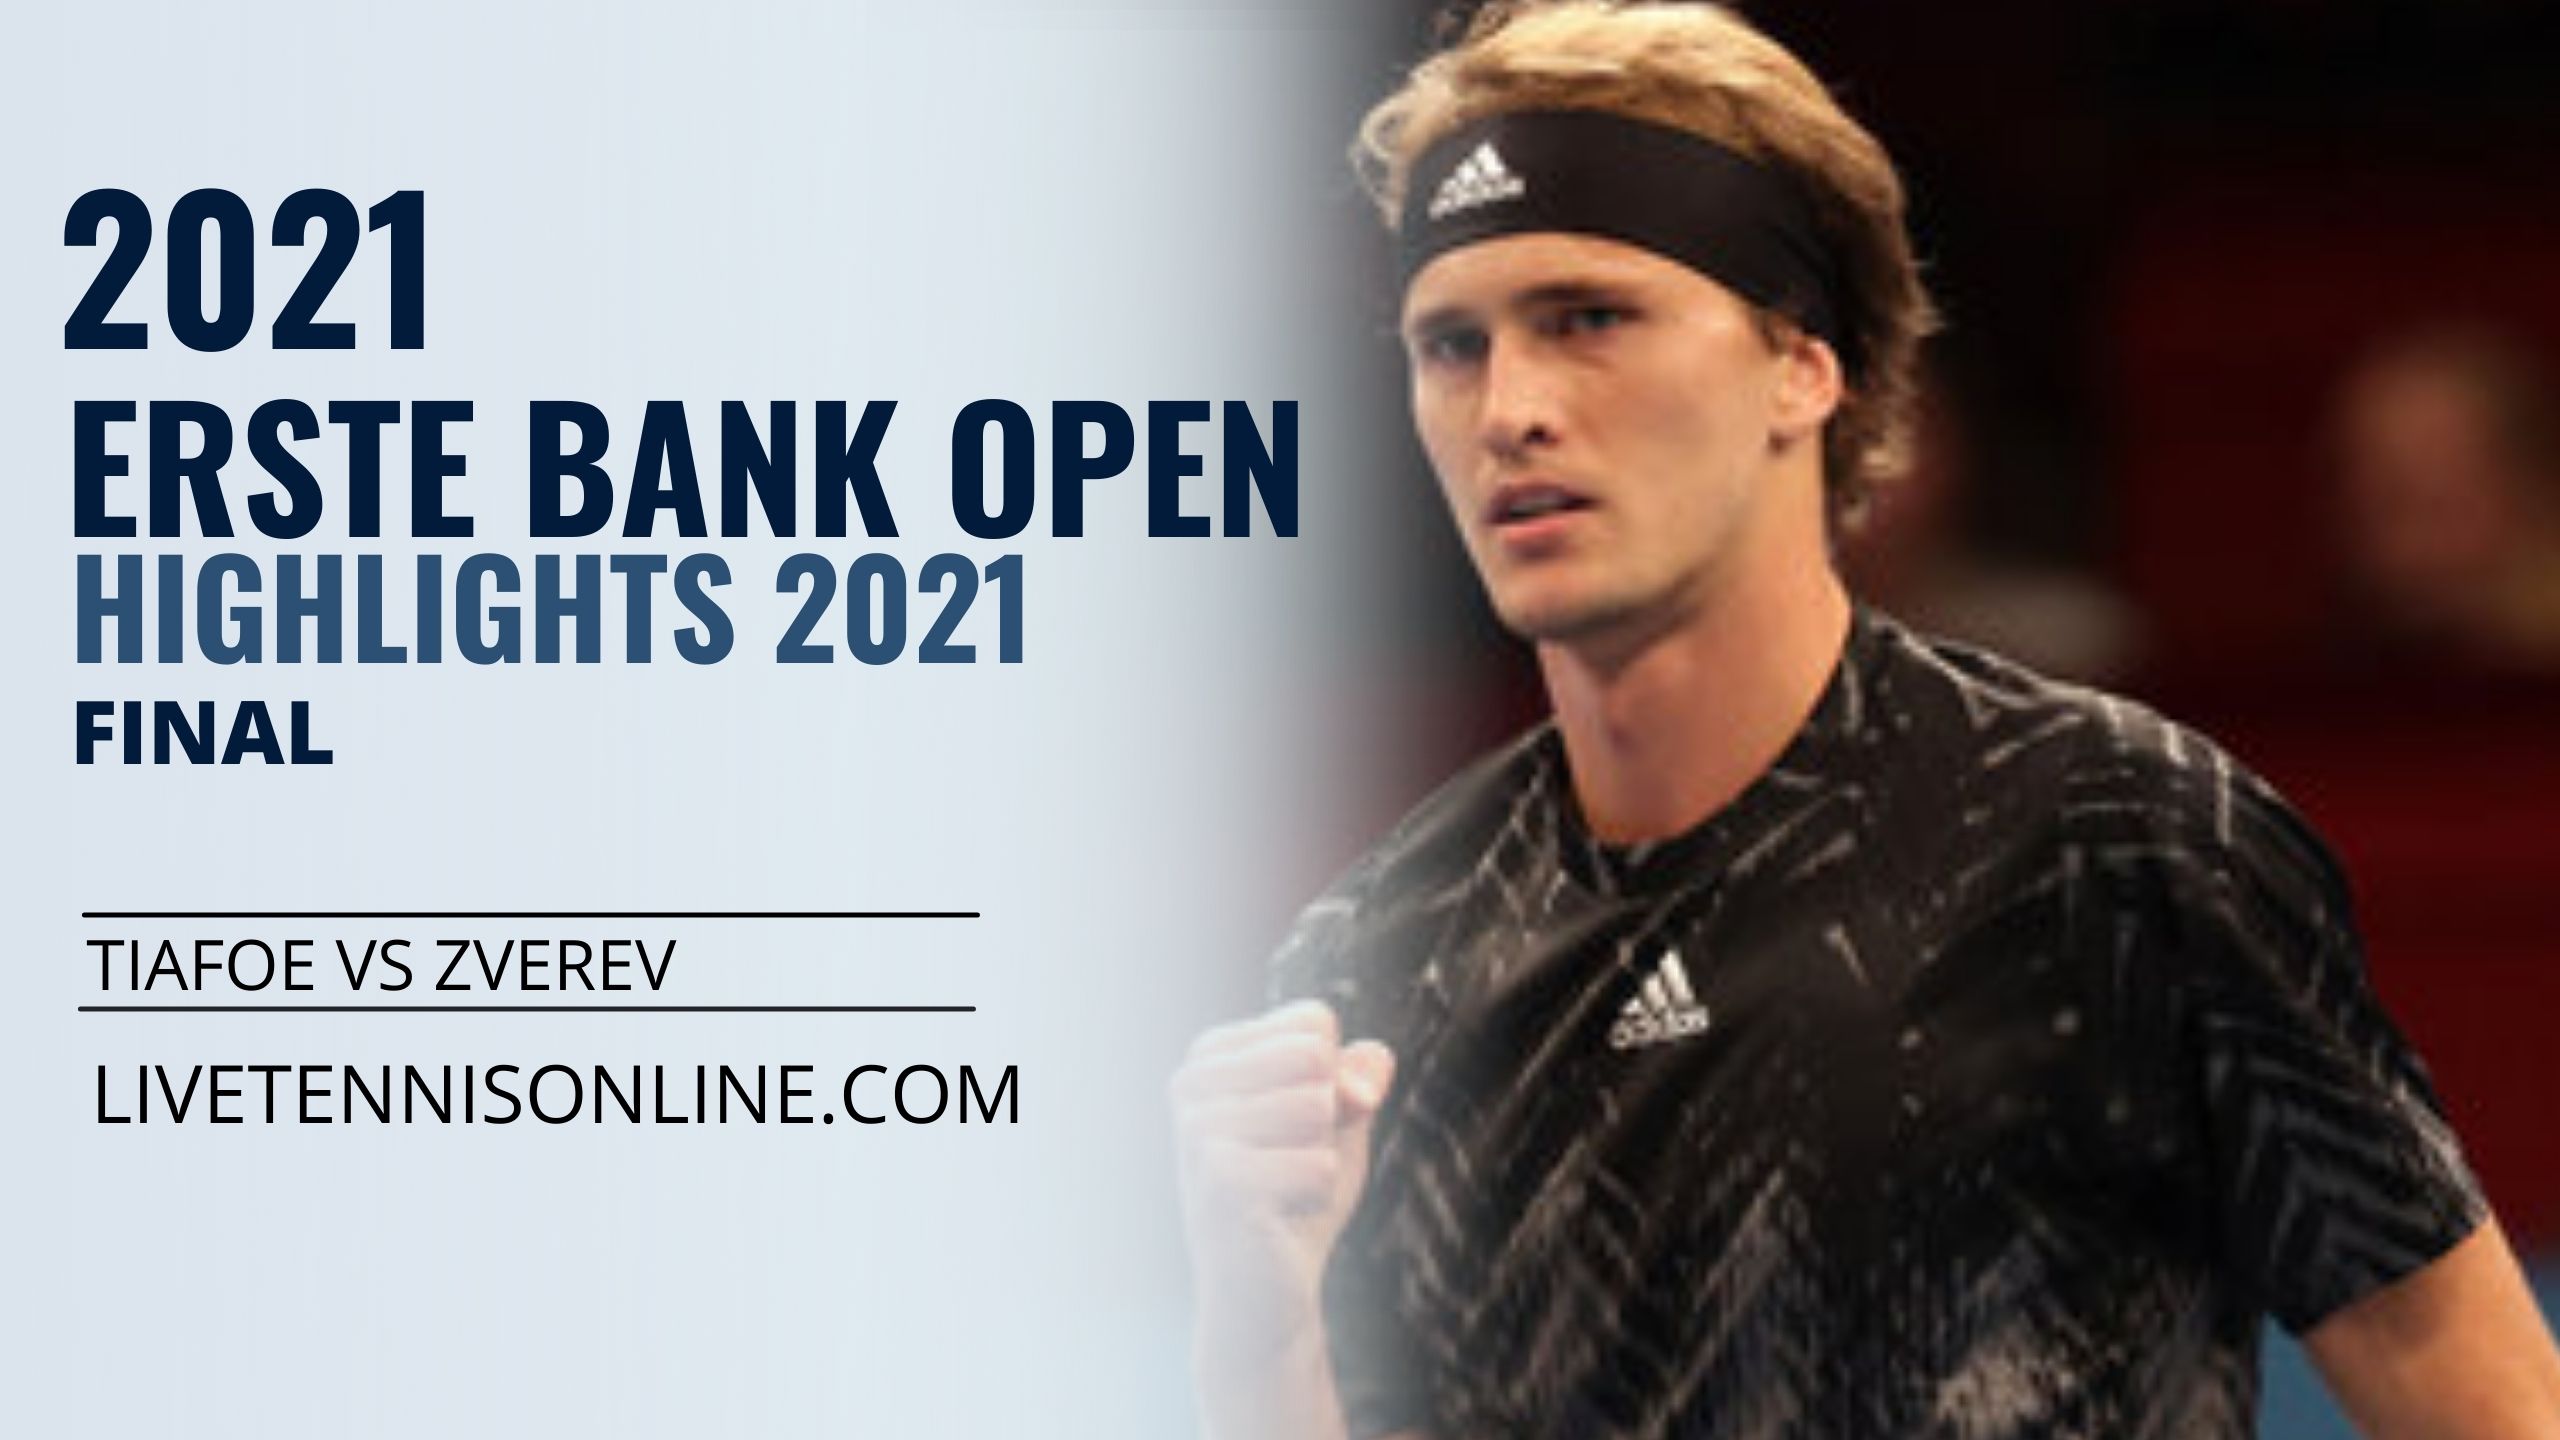 Tiafoe Vs Zverev Final Highlights 2021 Erste Bank Open